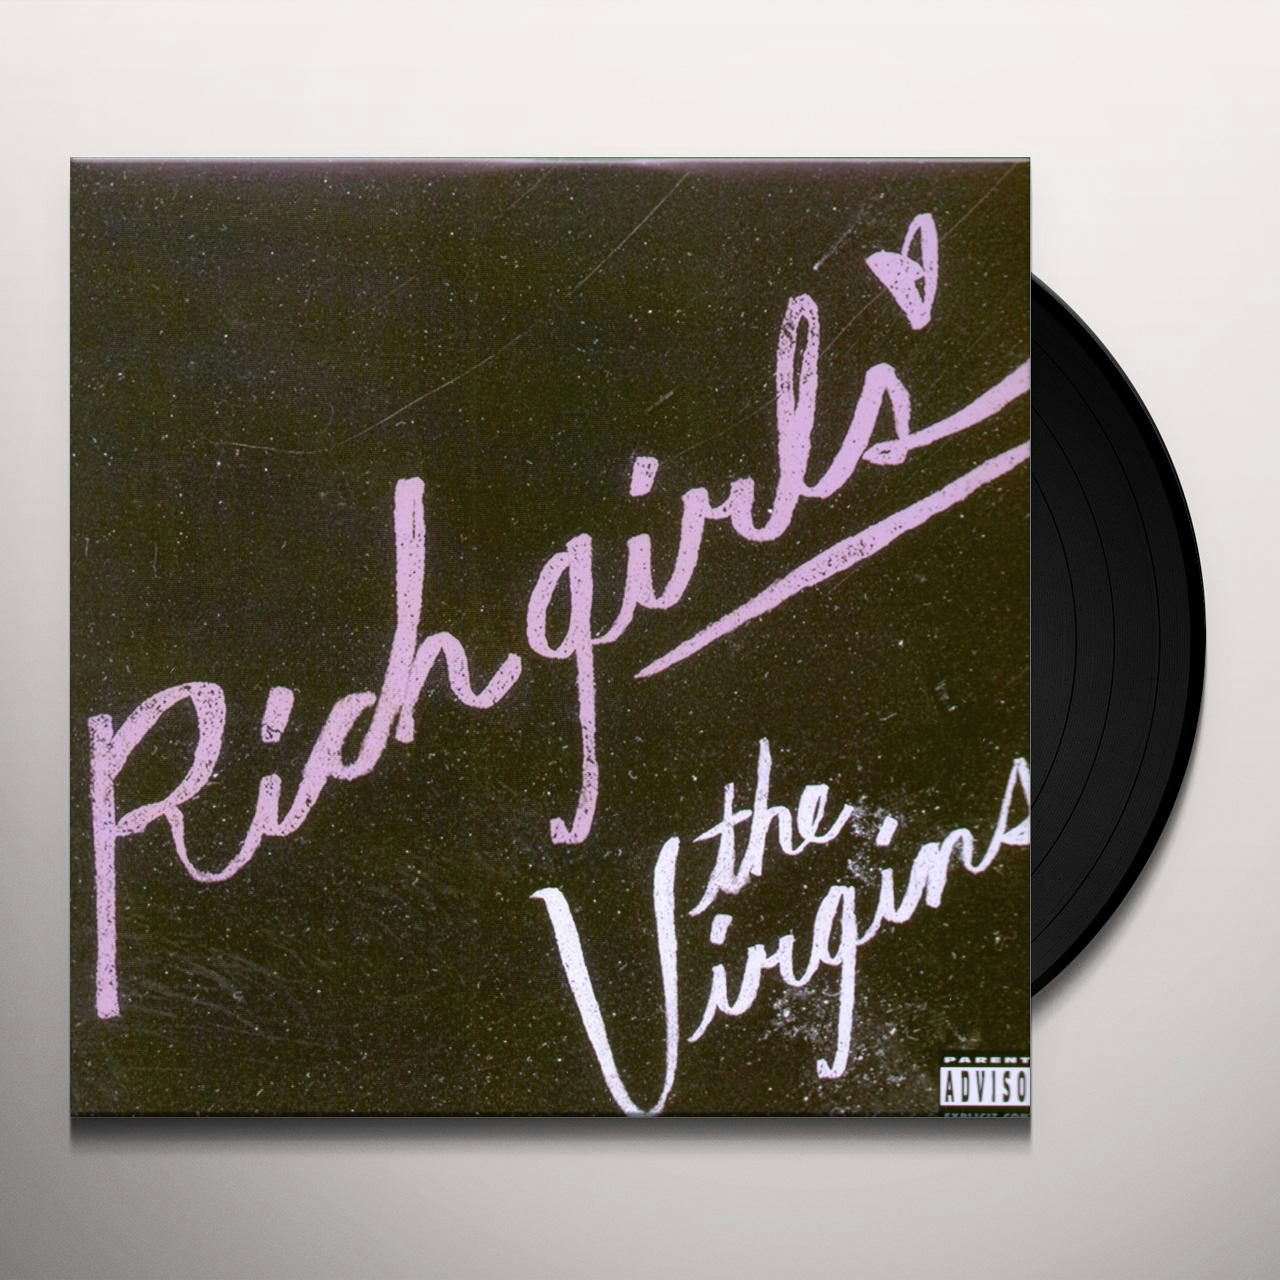 The Virgins 「Strike Gently」LPレコード